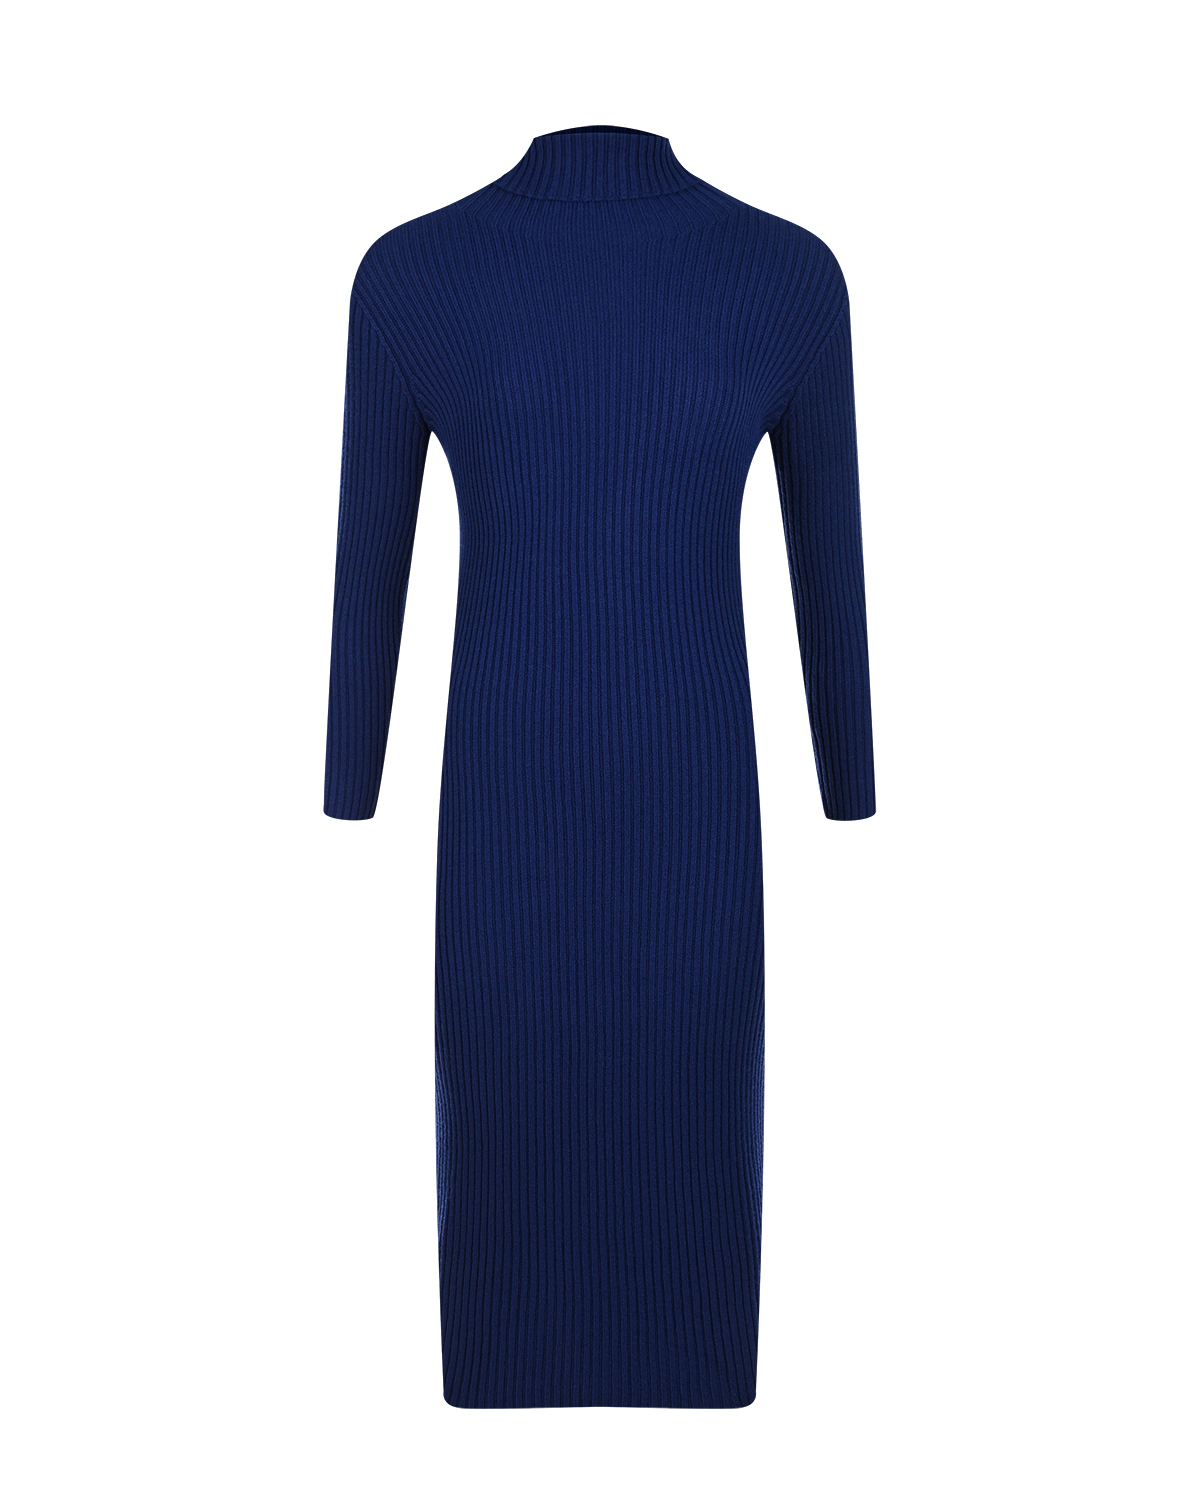 Синее платье Livigno Pietro Brunelli, размер 44, цвет синий